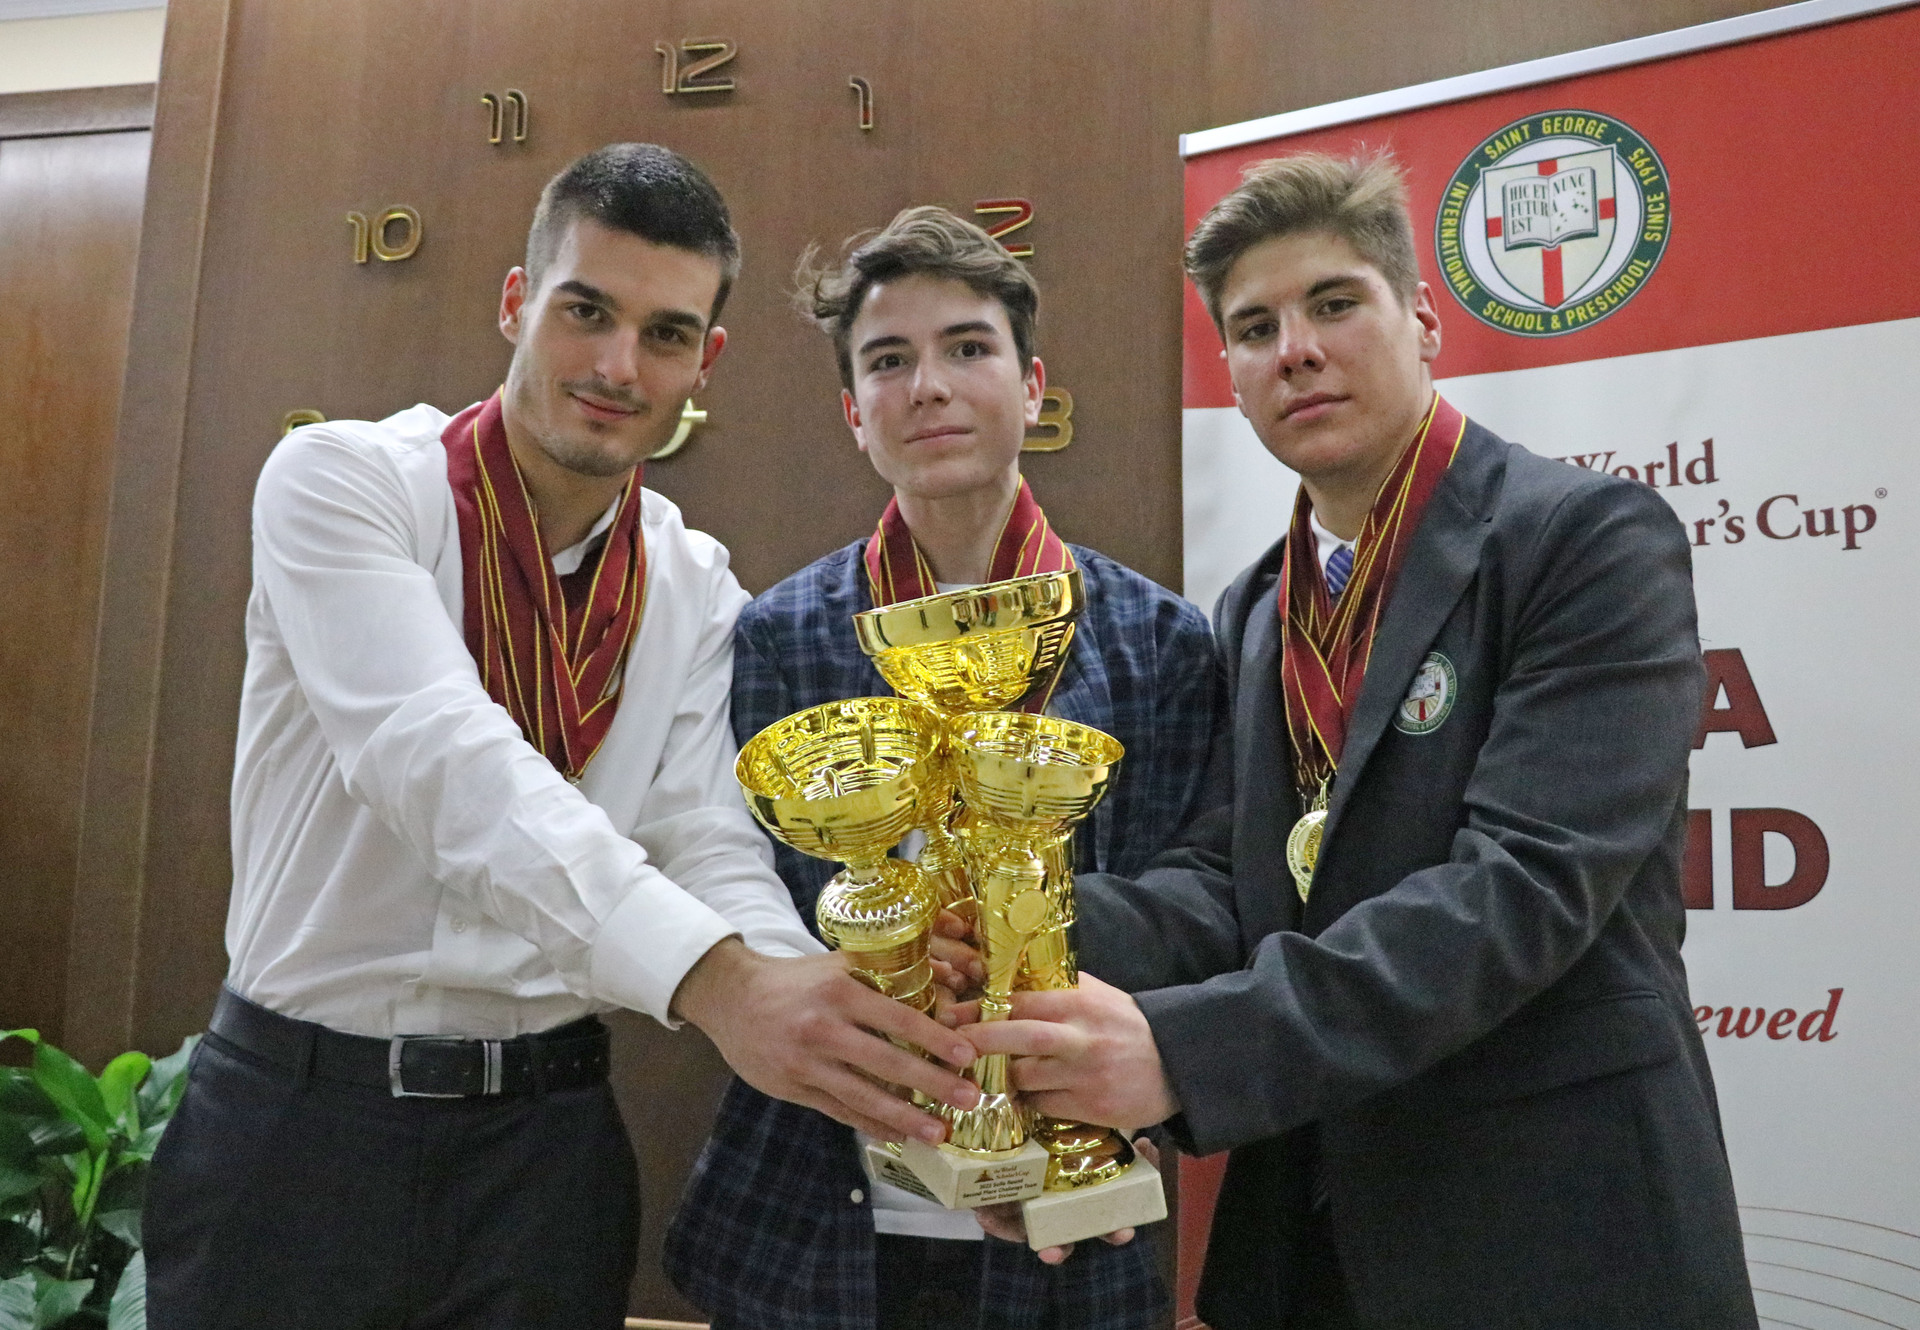 The World Scholar’s Cup, Sofia Round 2022